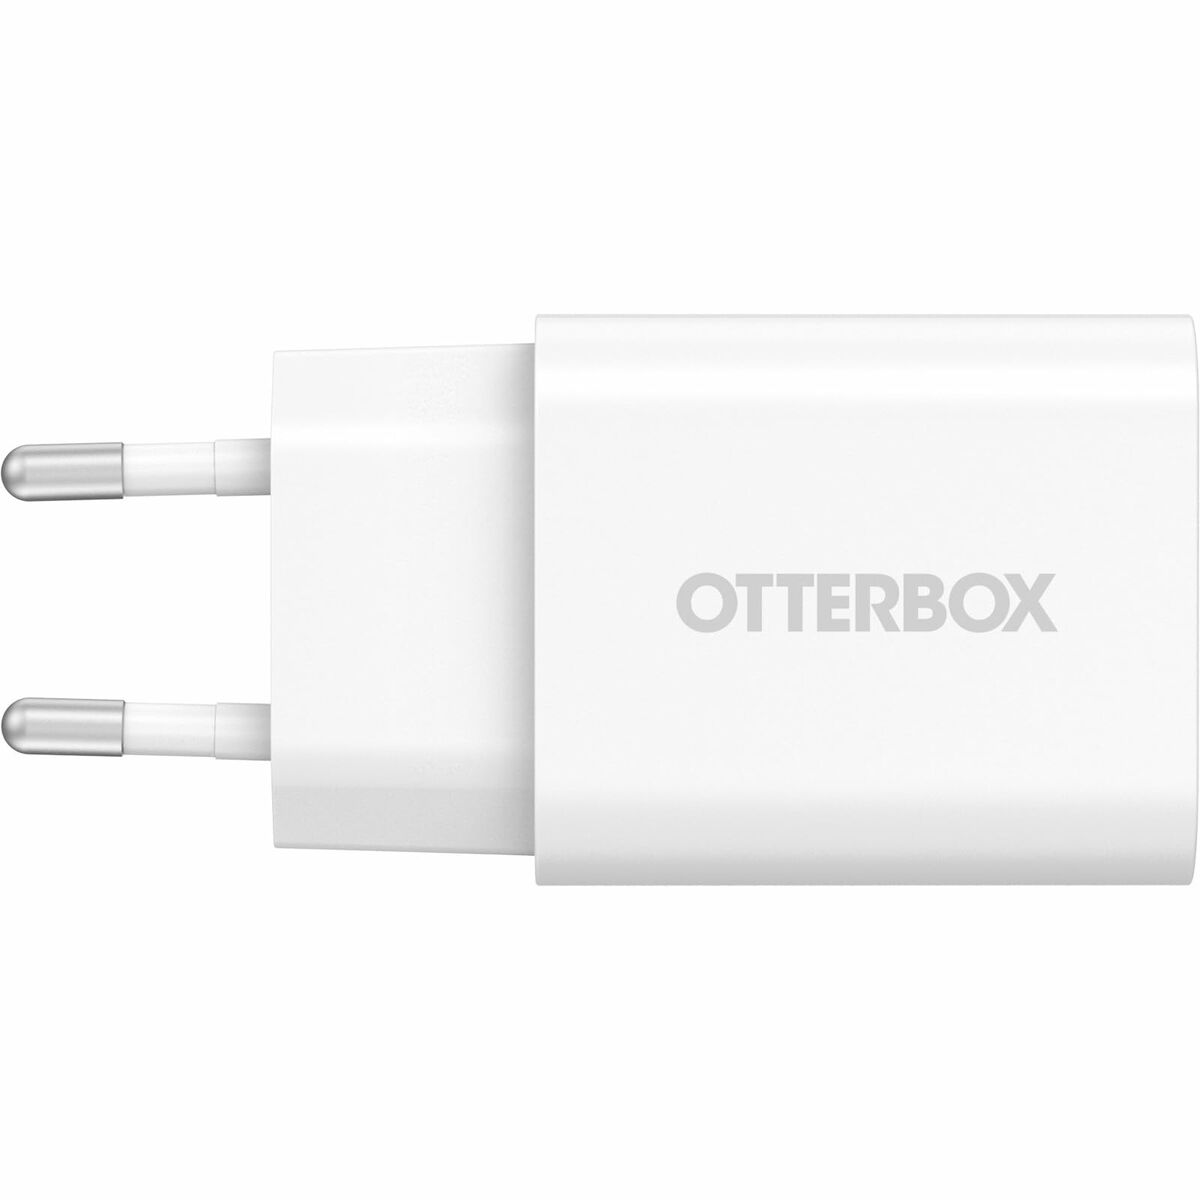 Caricatore portatile Otterbox LifeProof 840304749621 Bianco